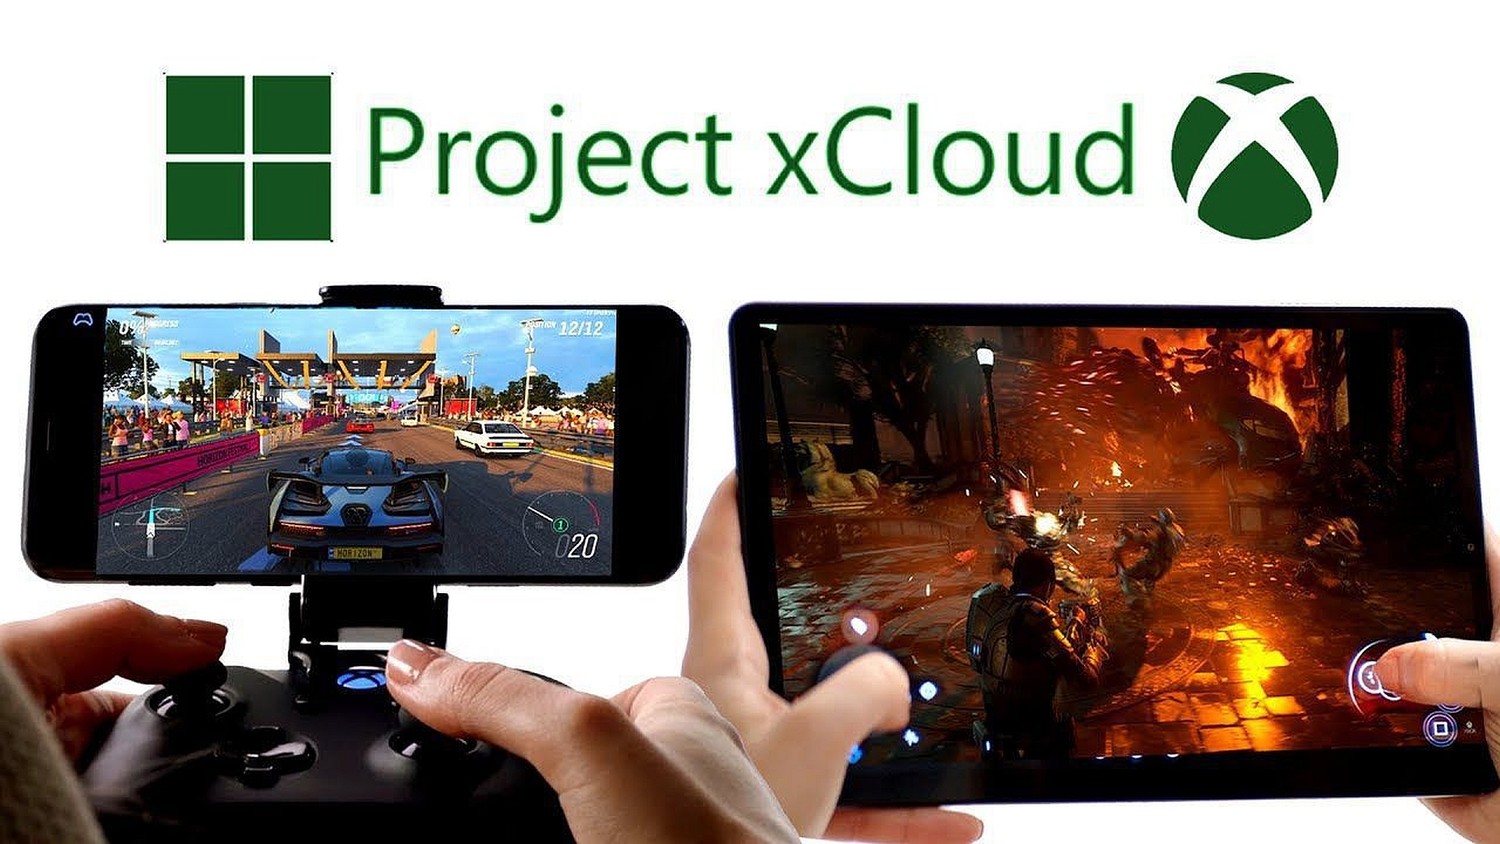 Microsoft's Project xCloud